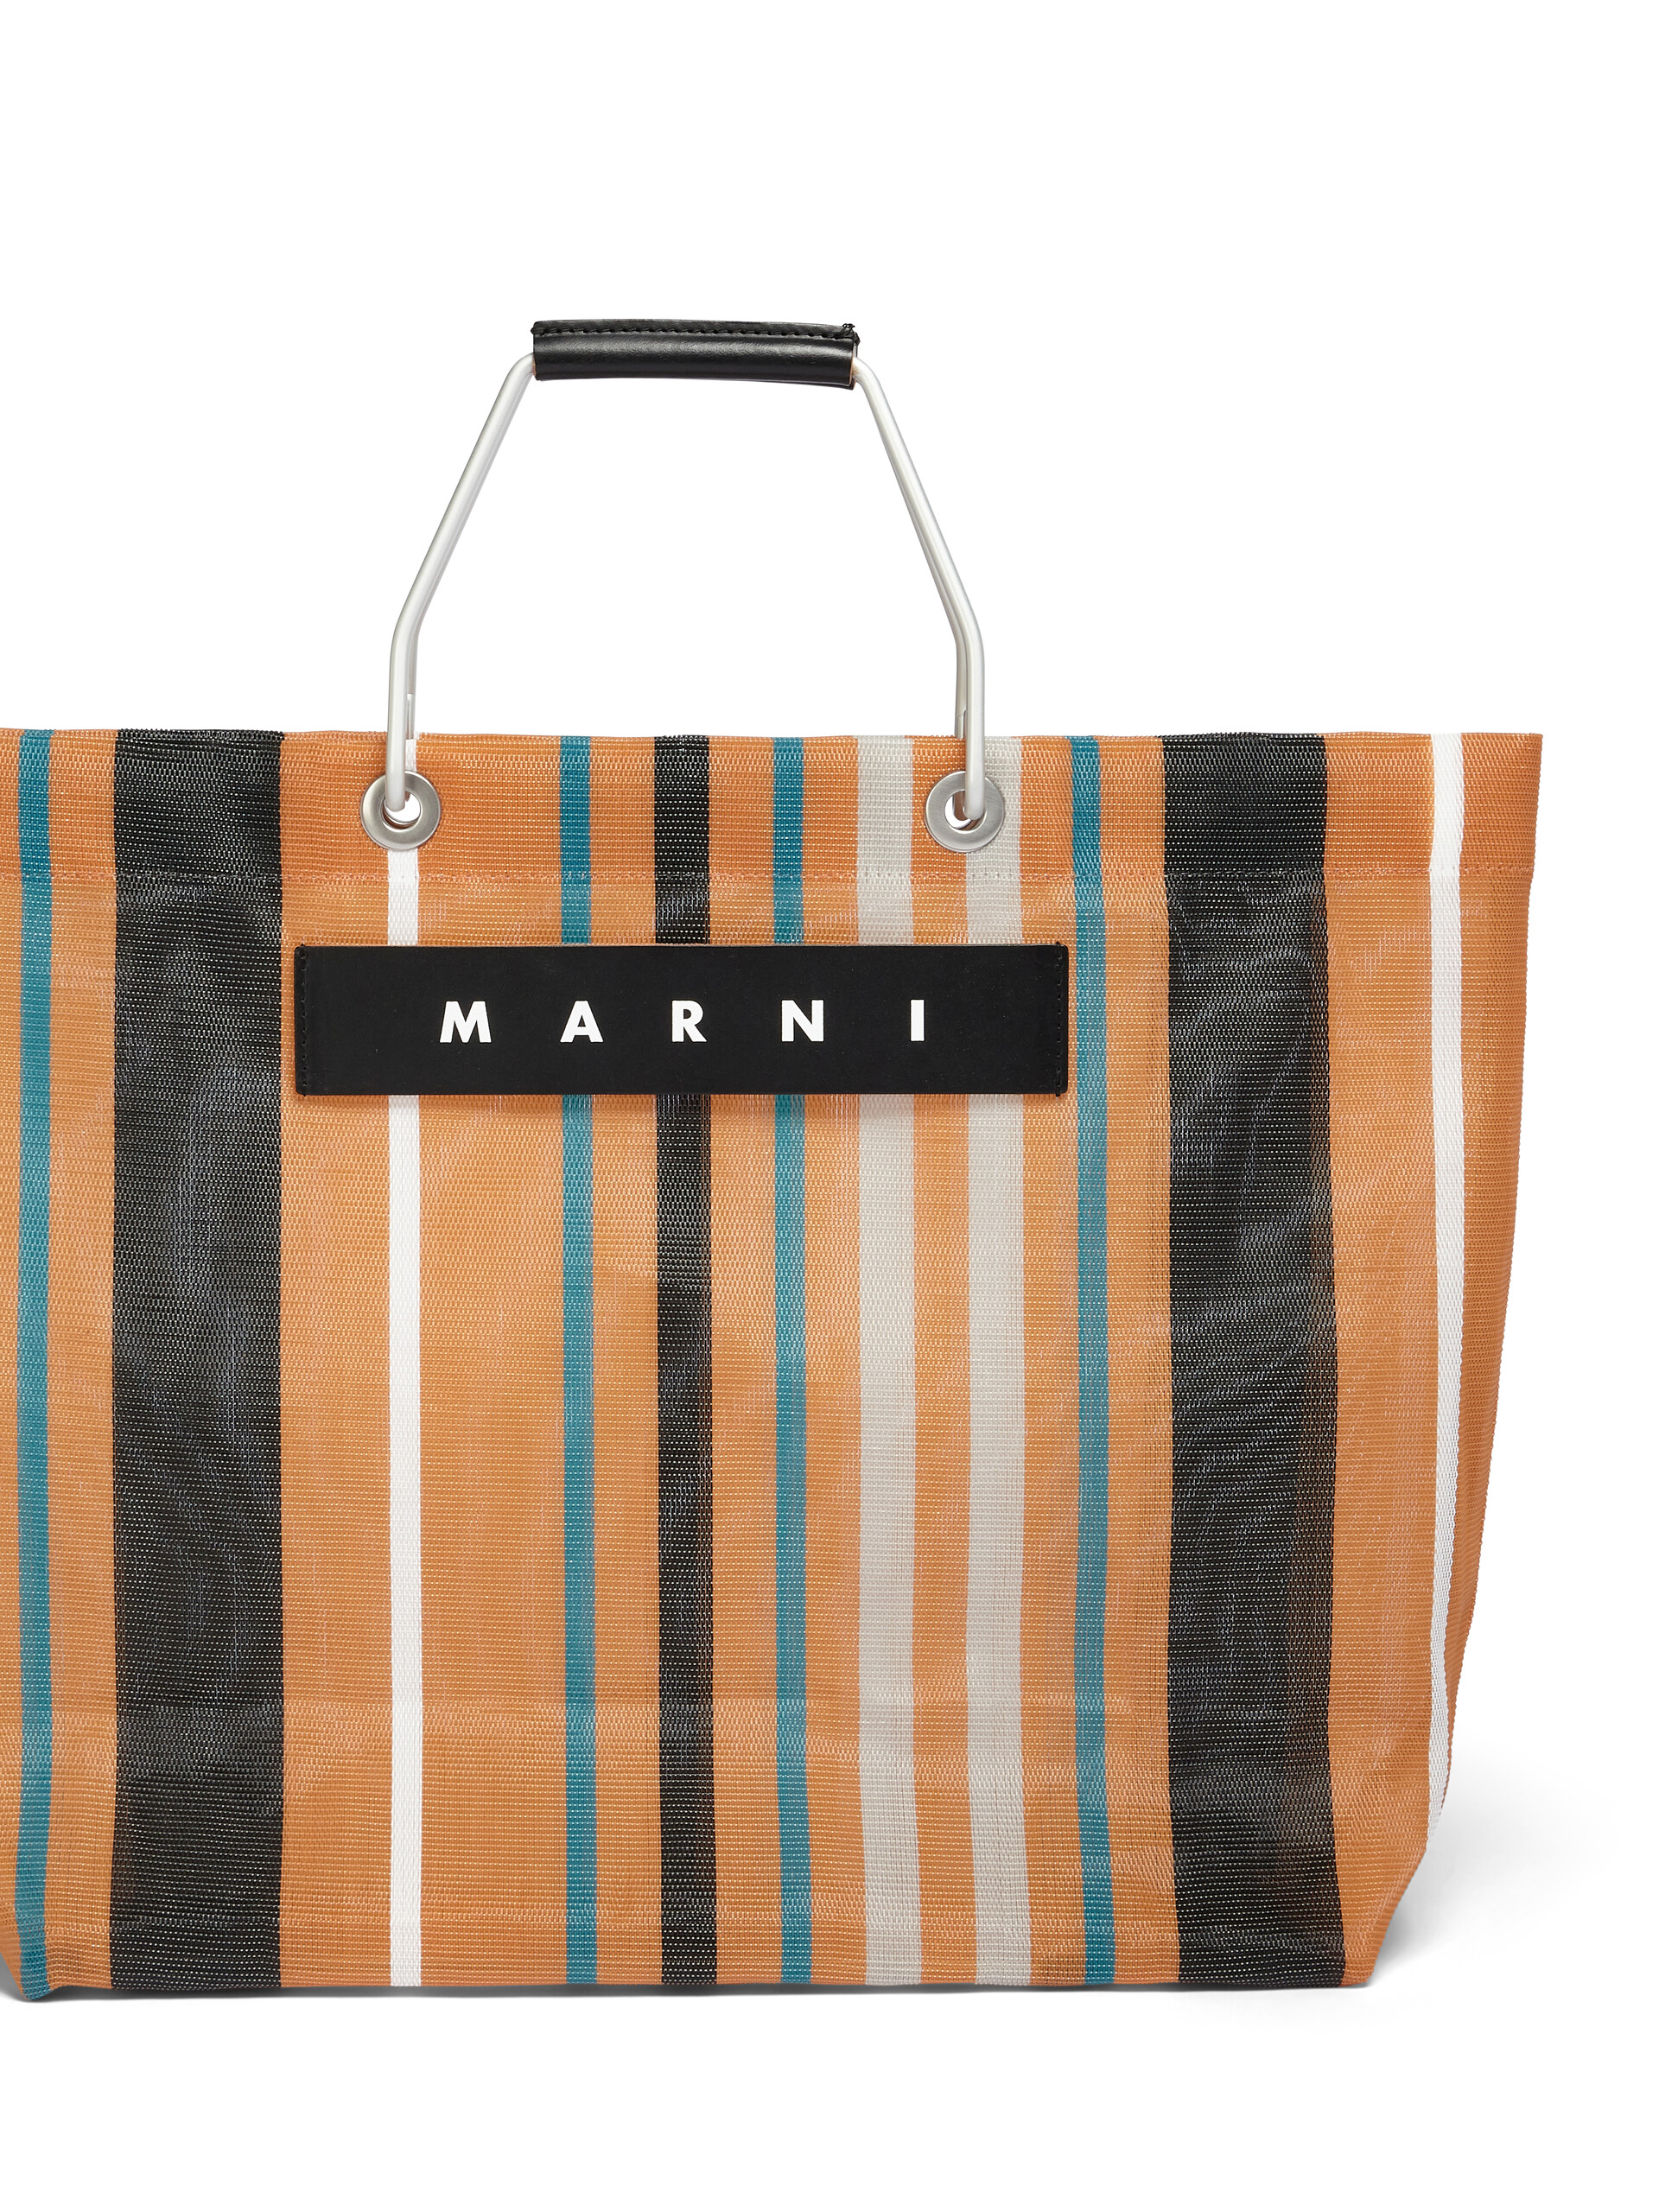 MARNI MARKET STRIPE multicolor orange bag - Shopping Bags - Image 4